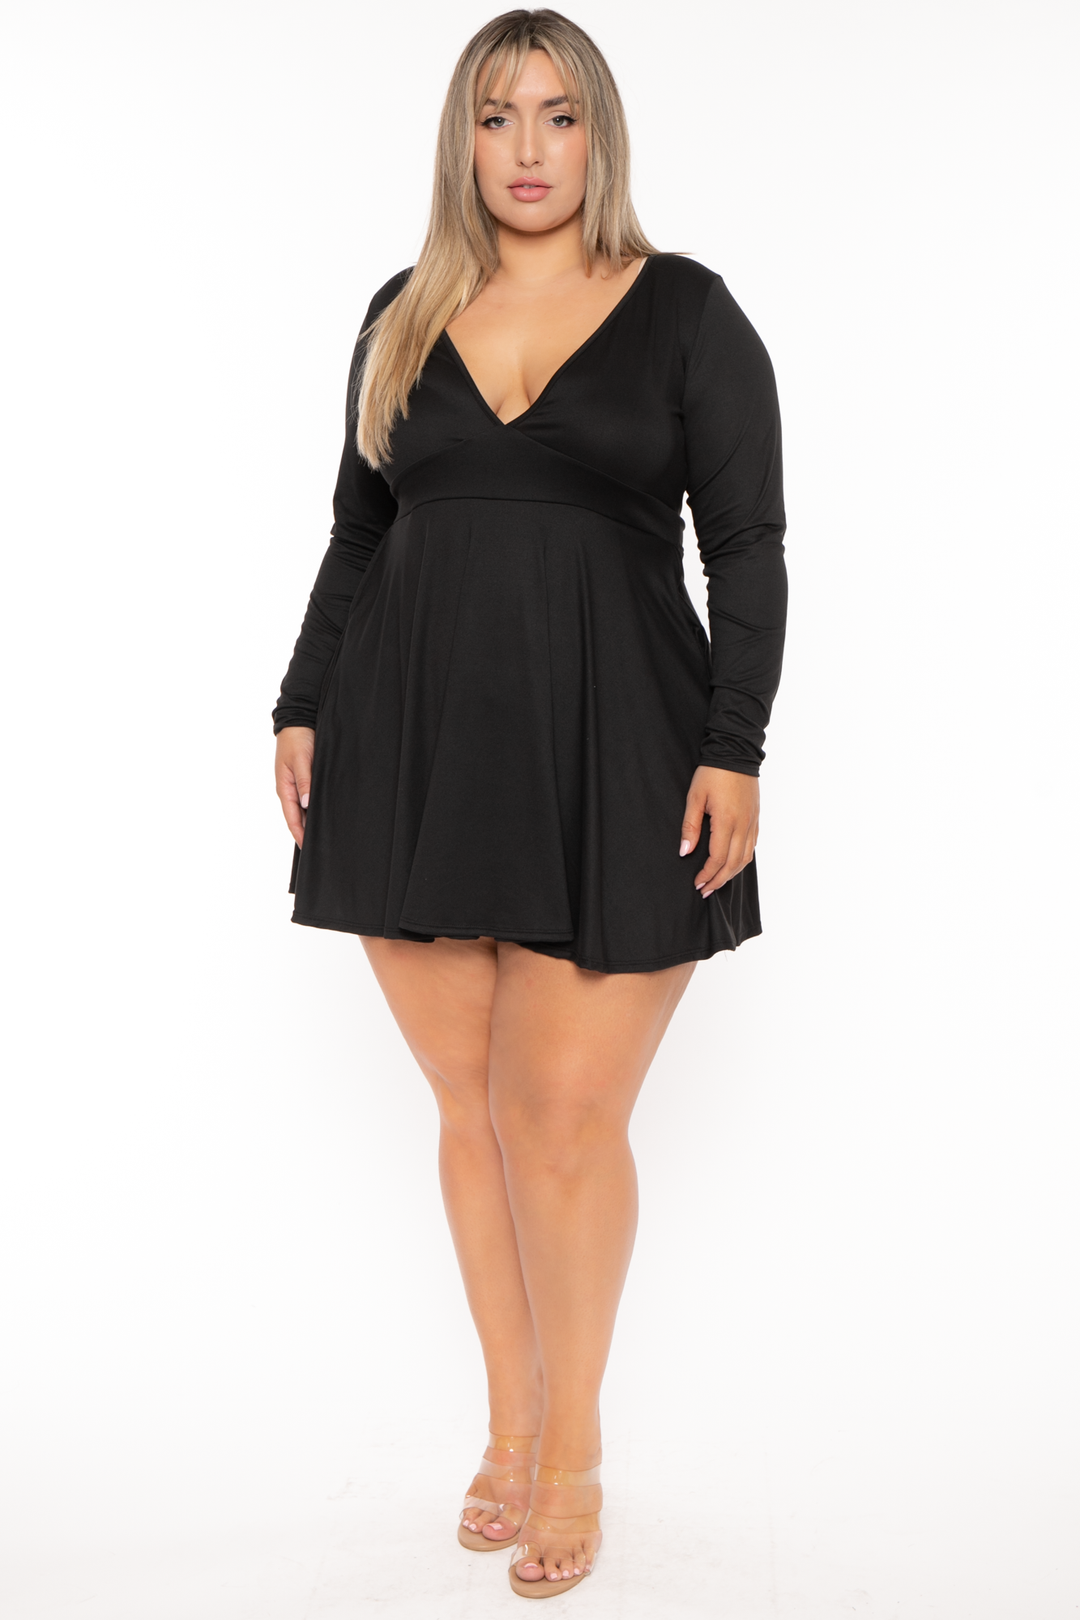 Curvy Sense Dresses Plus Size Jeanna Flare Dress - Black